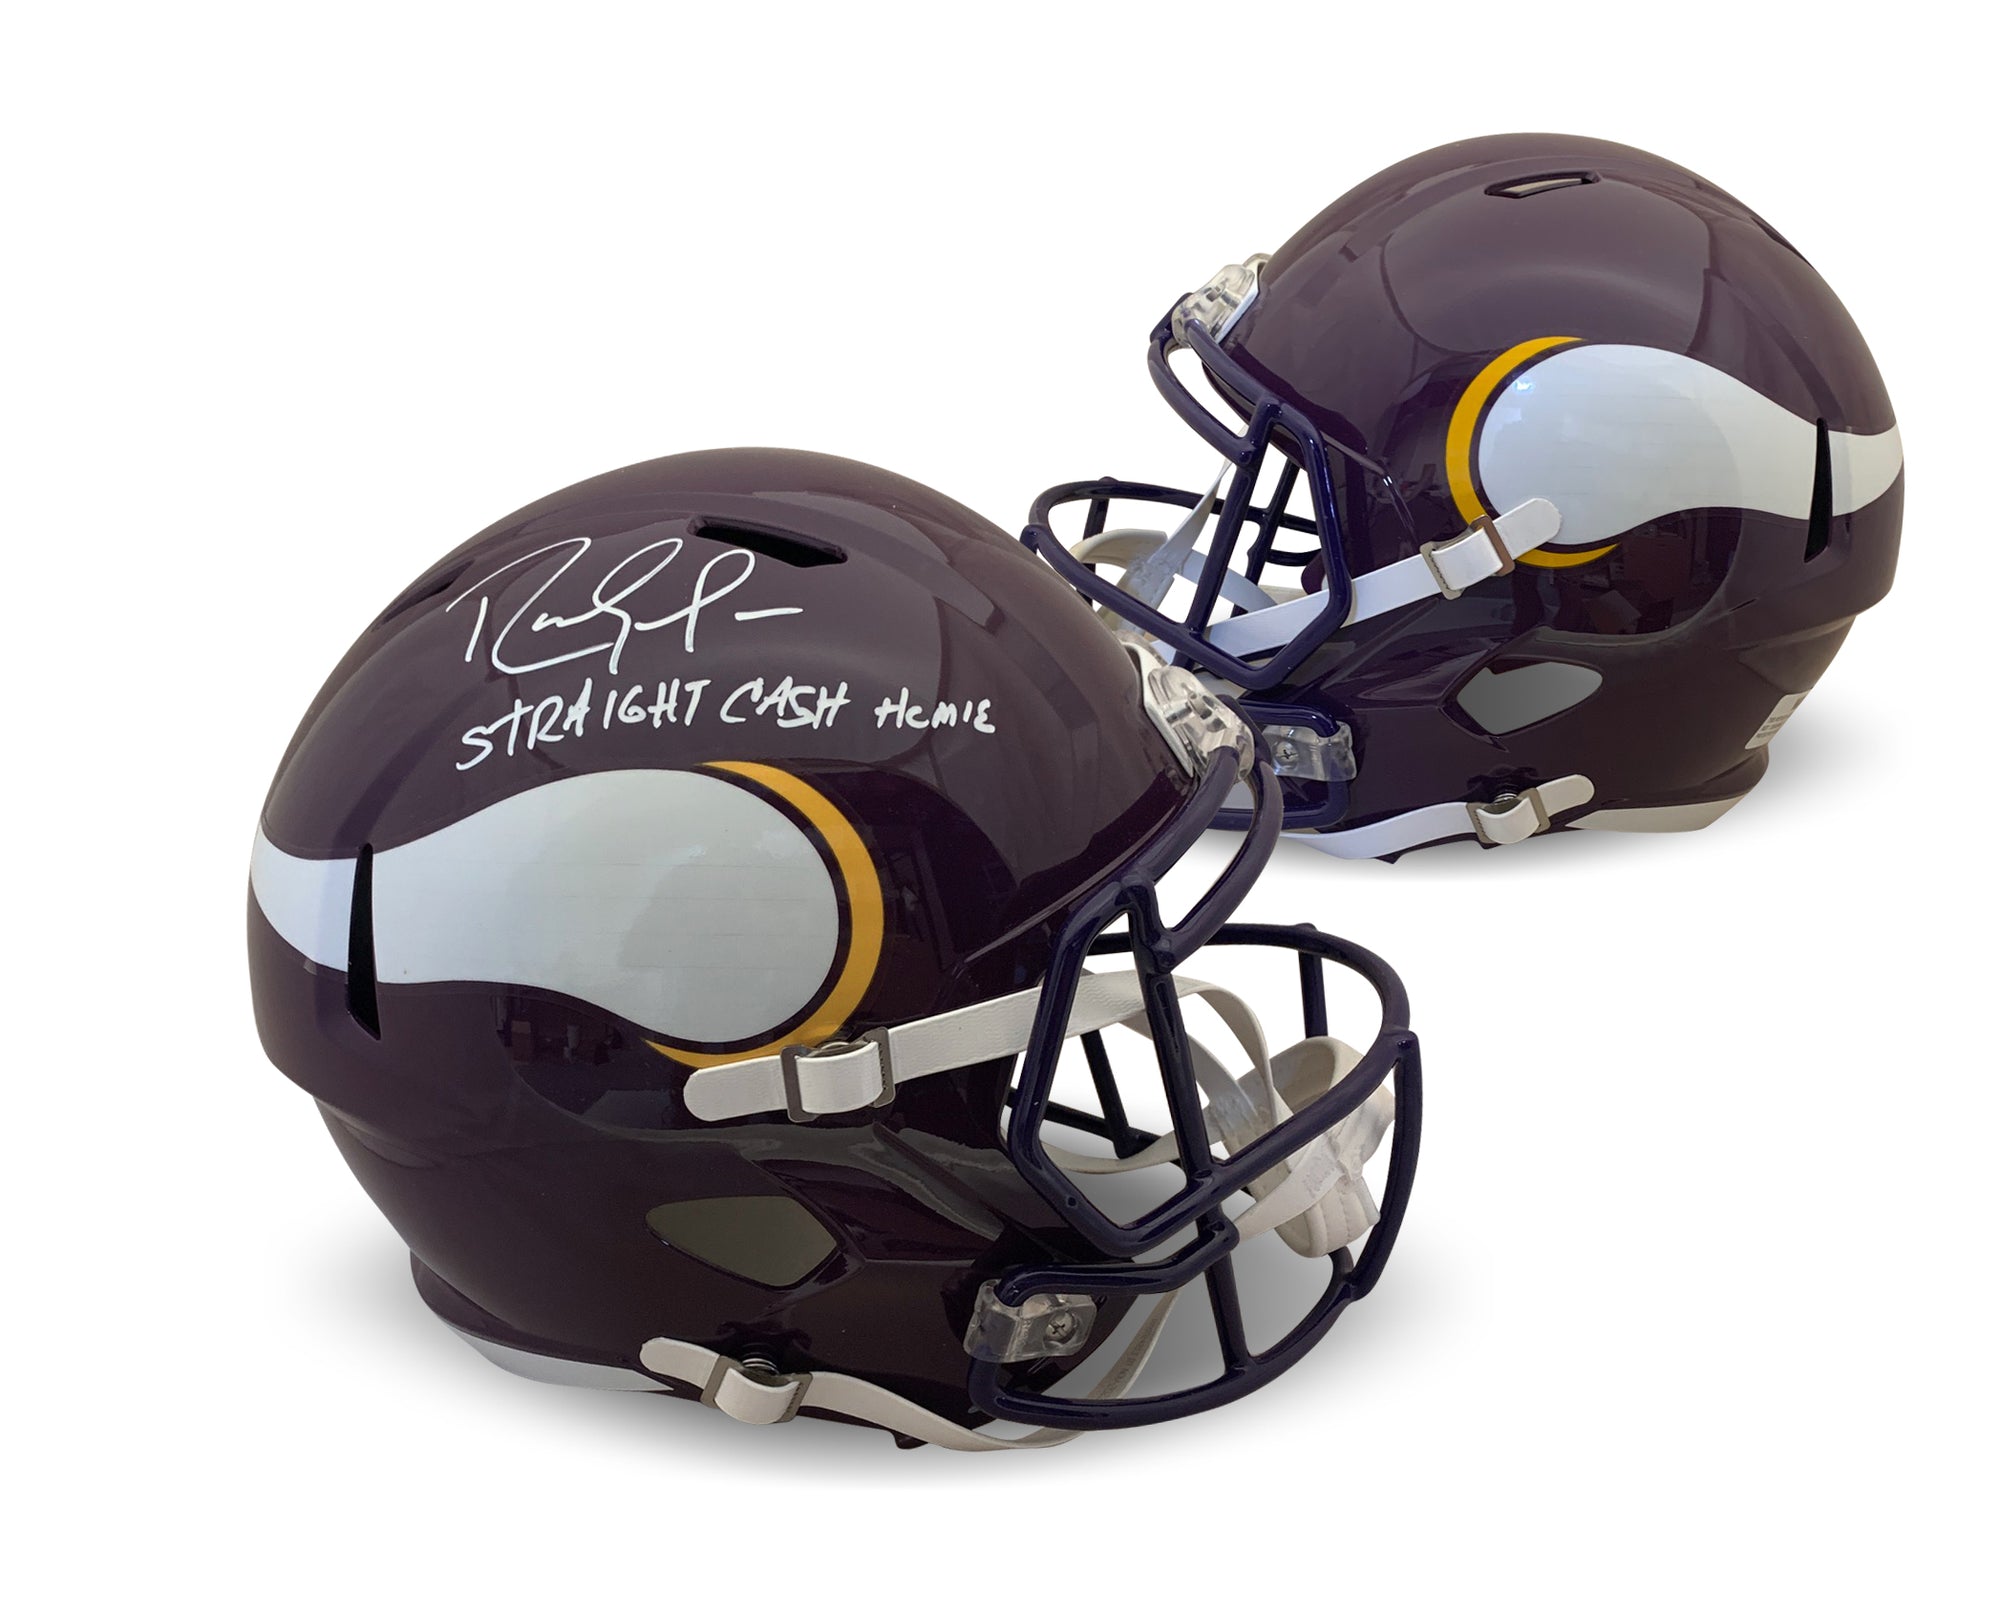 Randy Moss Autographed Minnesota Vikings Signed Football Full Size Replica Helmet STRAIGHT CASH HOMIE Beckett COA-Powers Sports Memorabilia